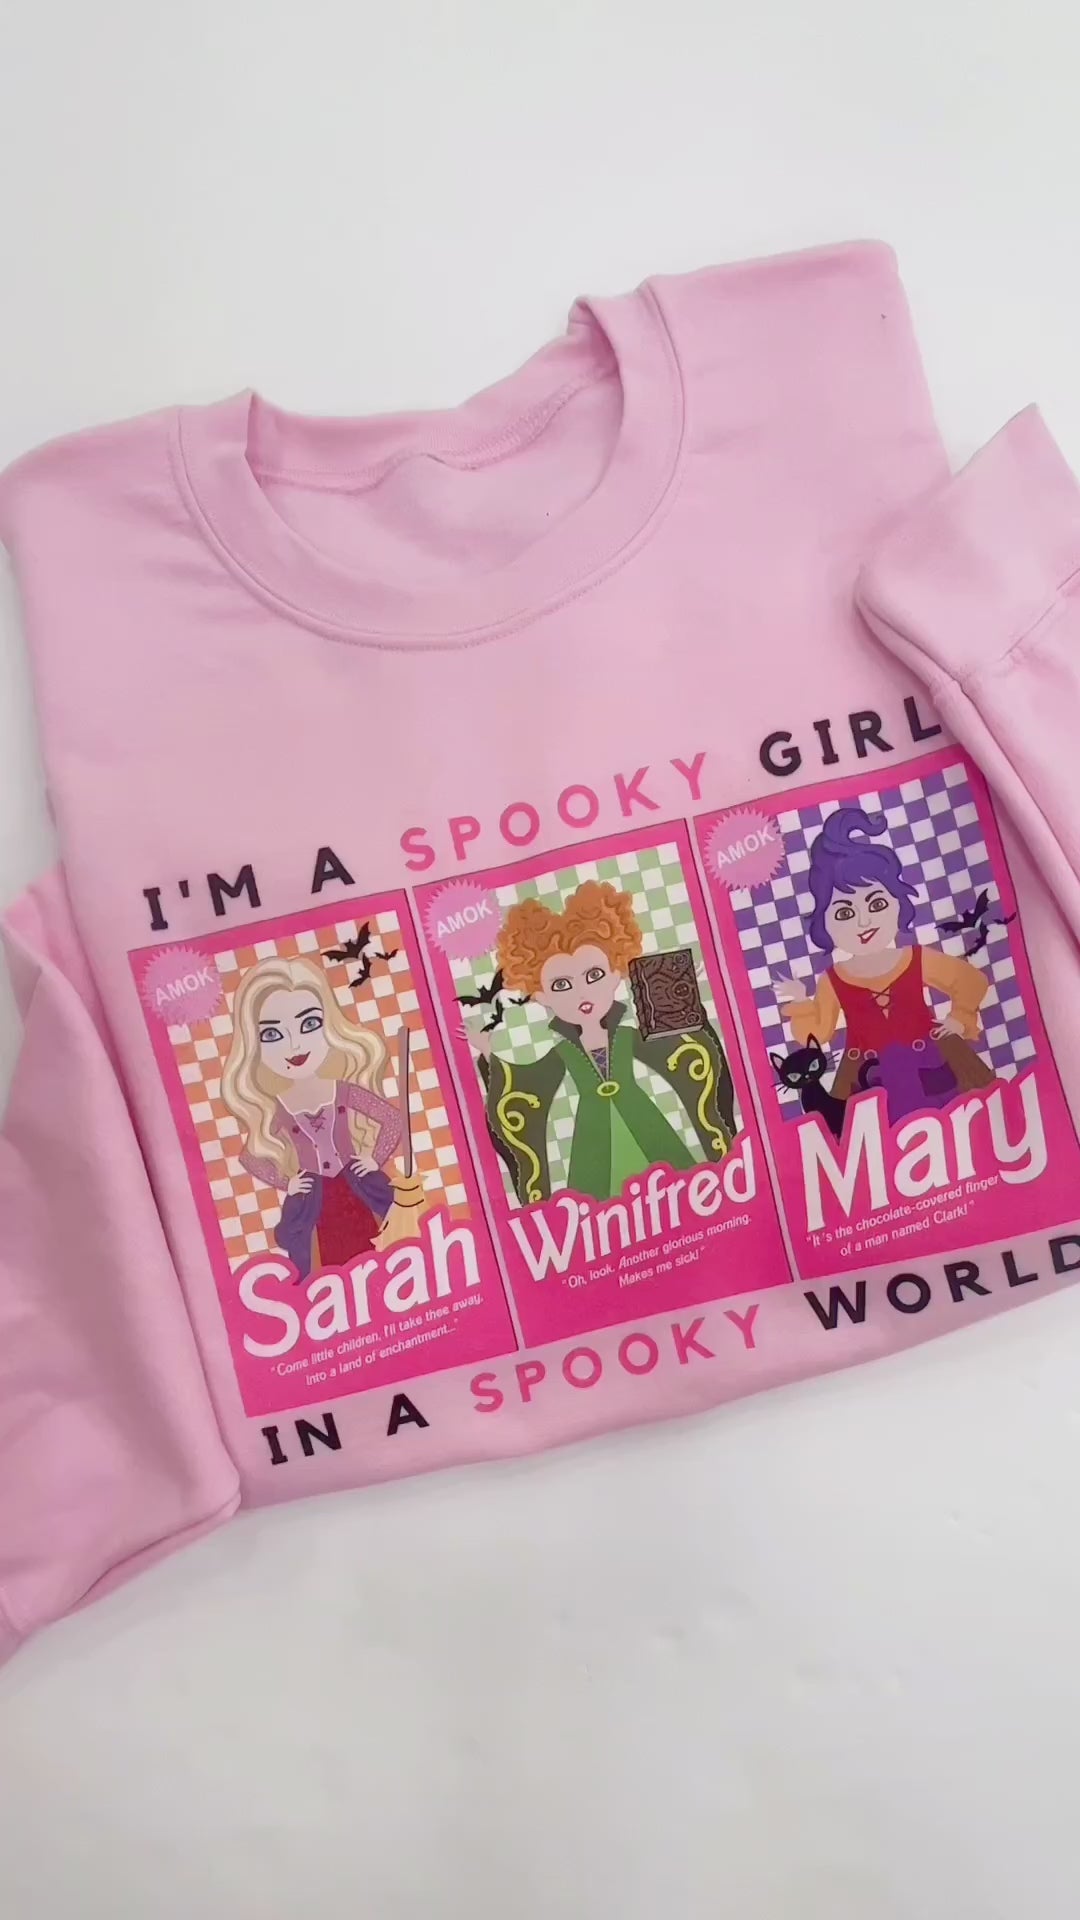 'I'm A Spooky Girl, In A Spooky World' Crewneck Sweatshirt